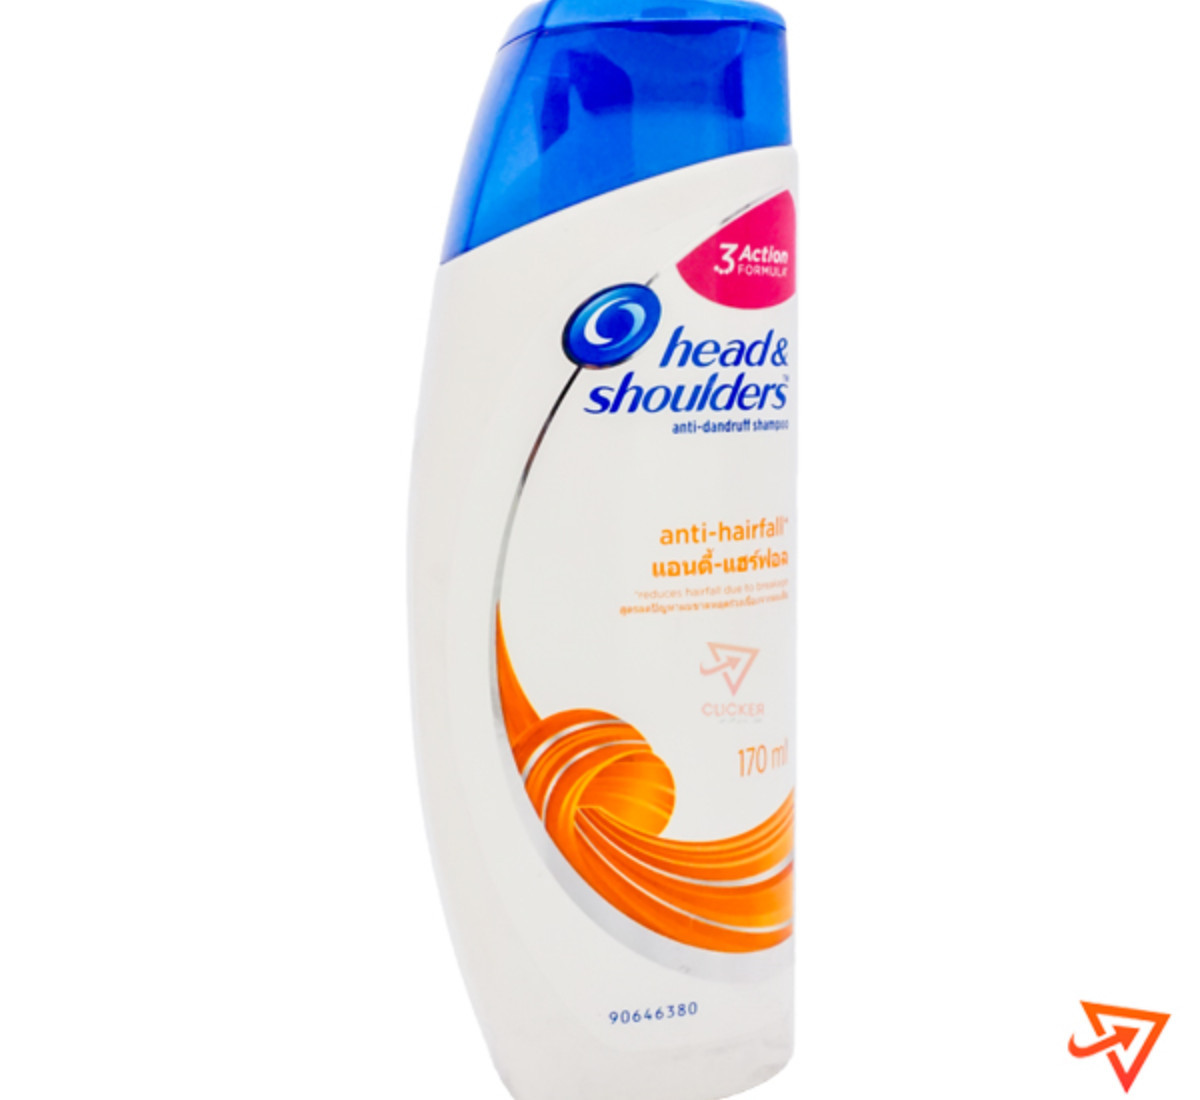 Clicker product 170ml HEAD&SHOULDERS anti-hairfall shampoo 1076